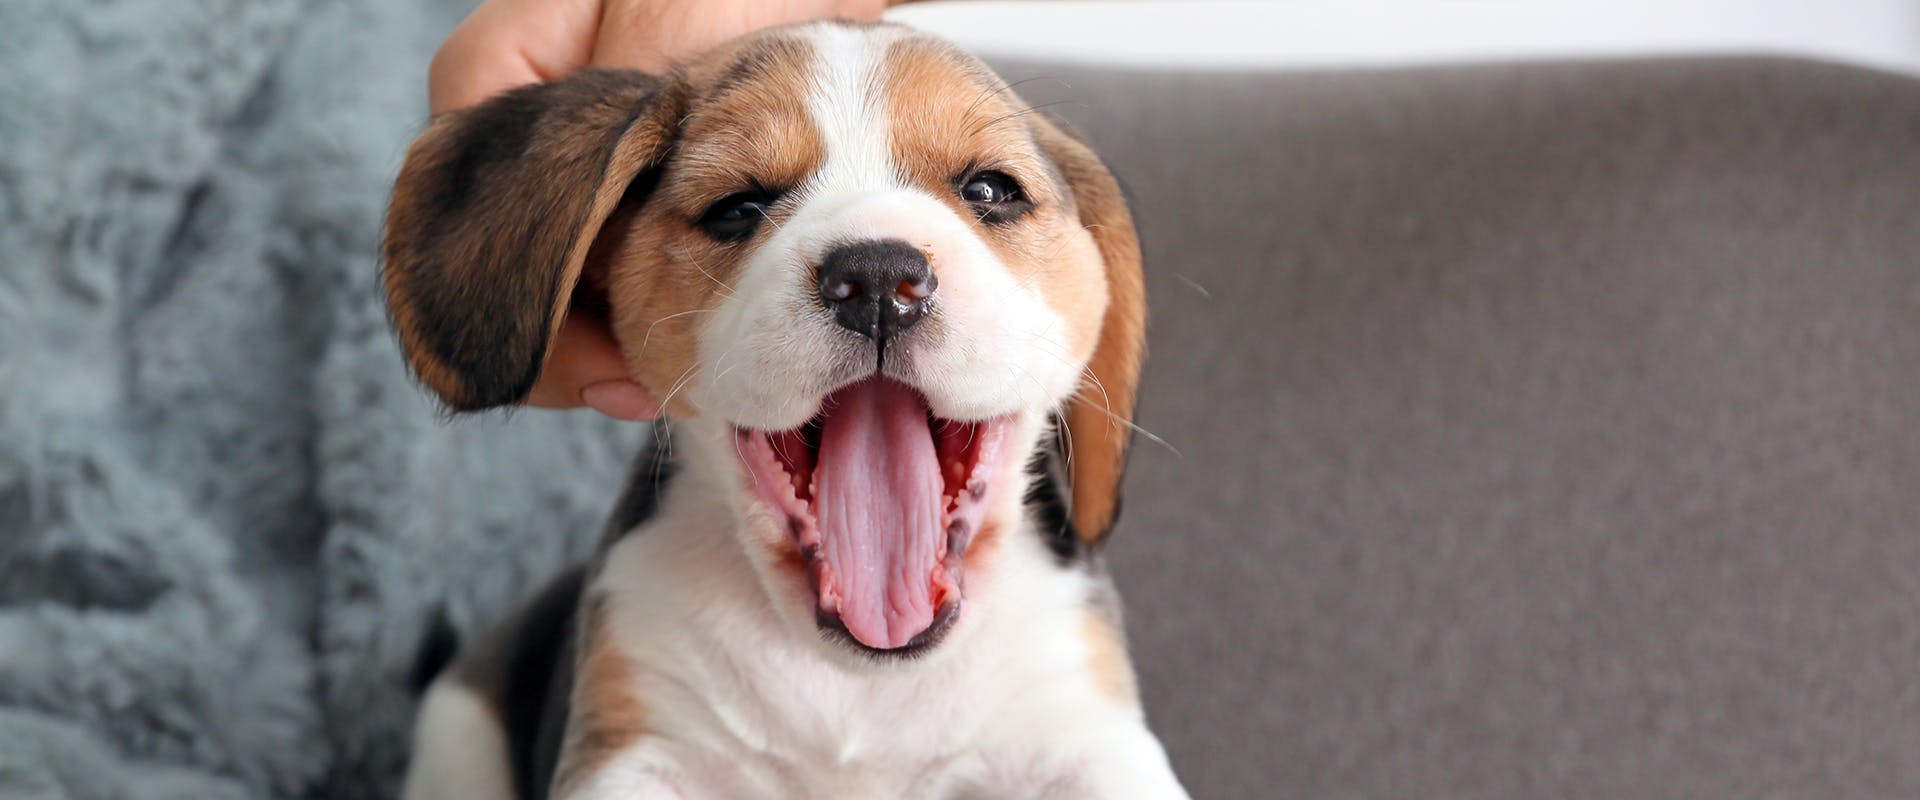 A cute Beagle puppy yawning